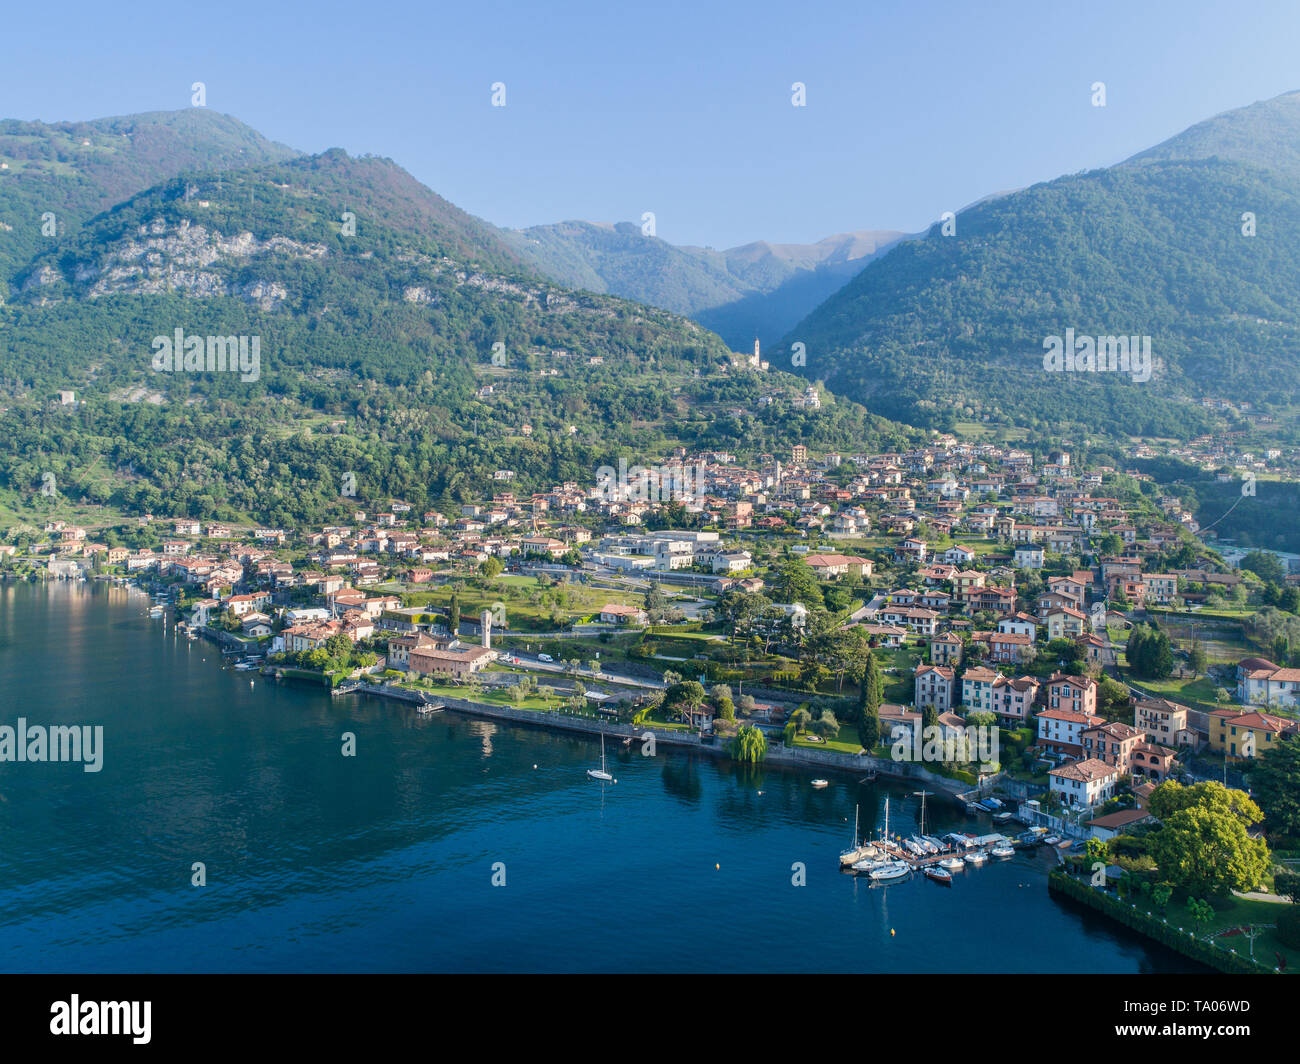 Village of Ossuccio, lake of Como. Italy. Aerial view Stock Photo